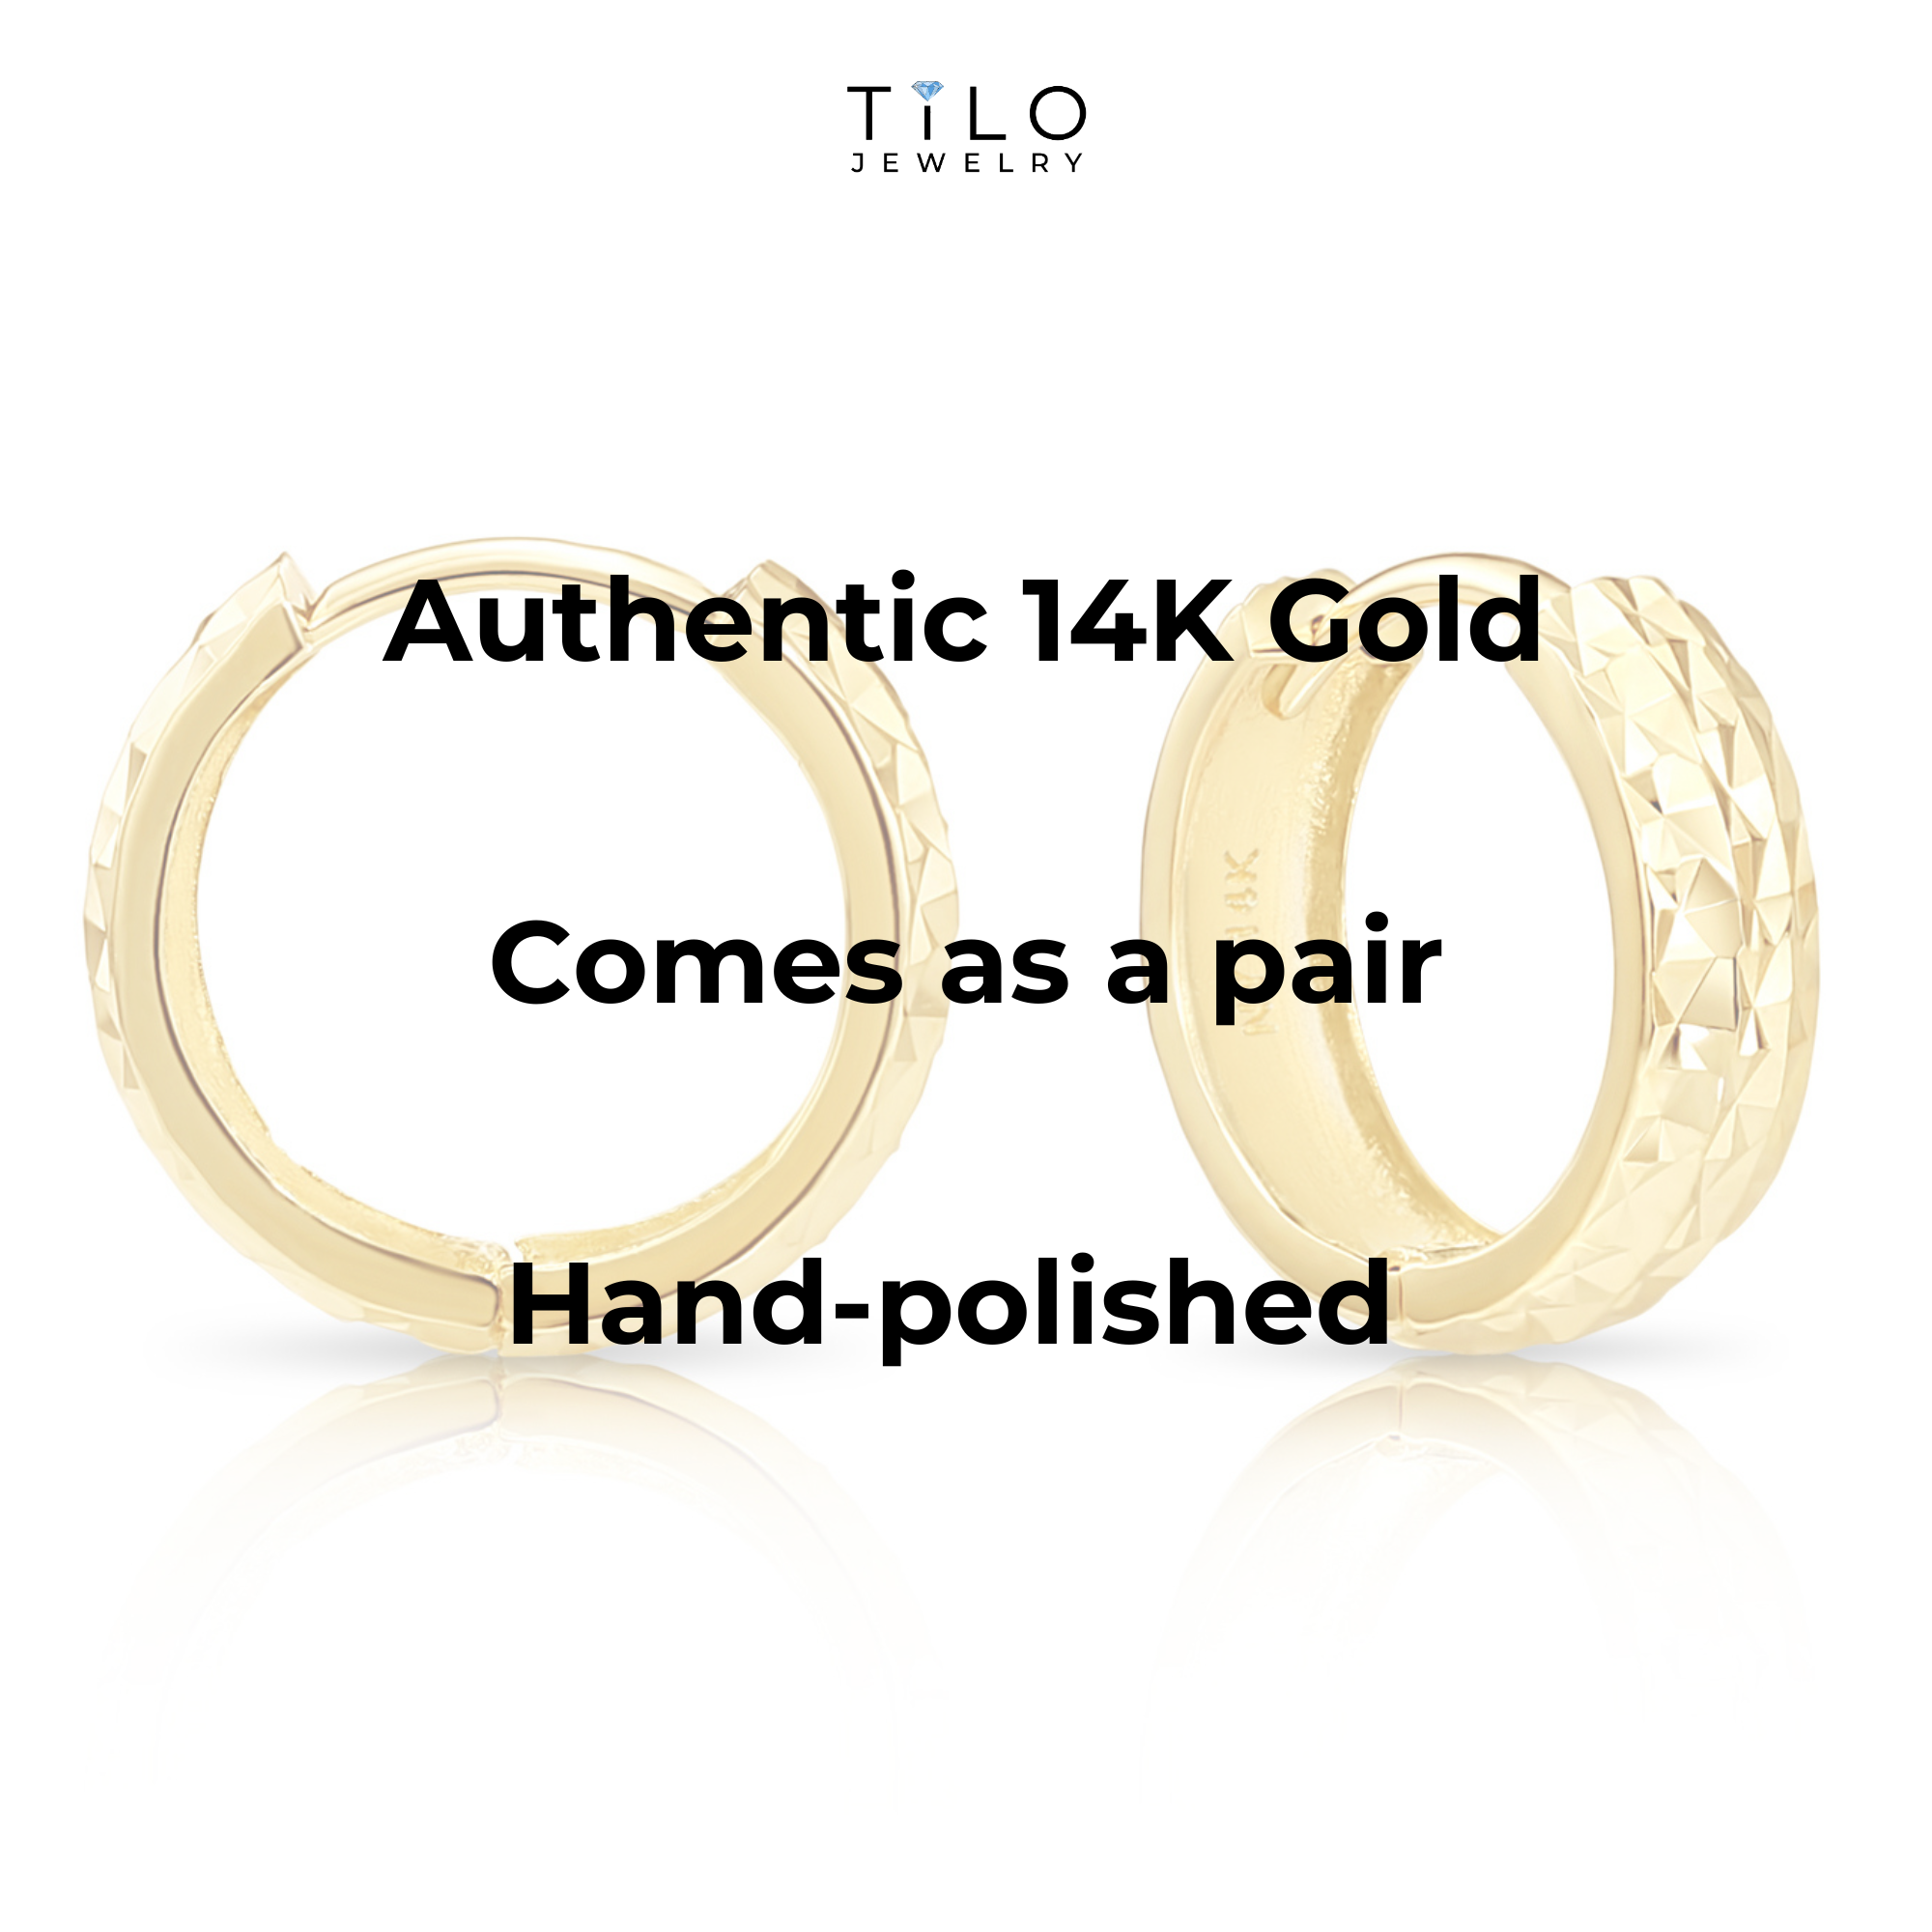 14K Gold Hand Engraved Huggies, Dainty 13mm Gold Earrings